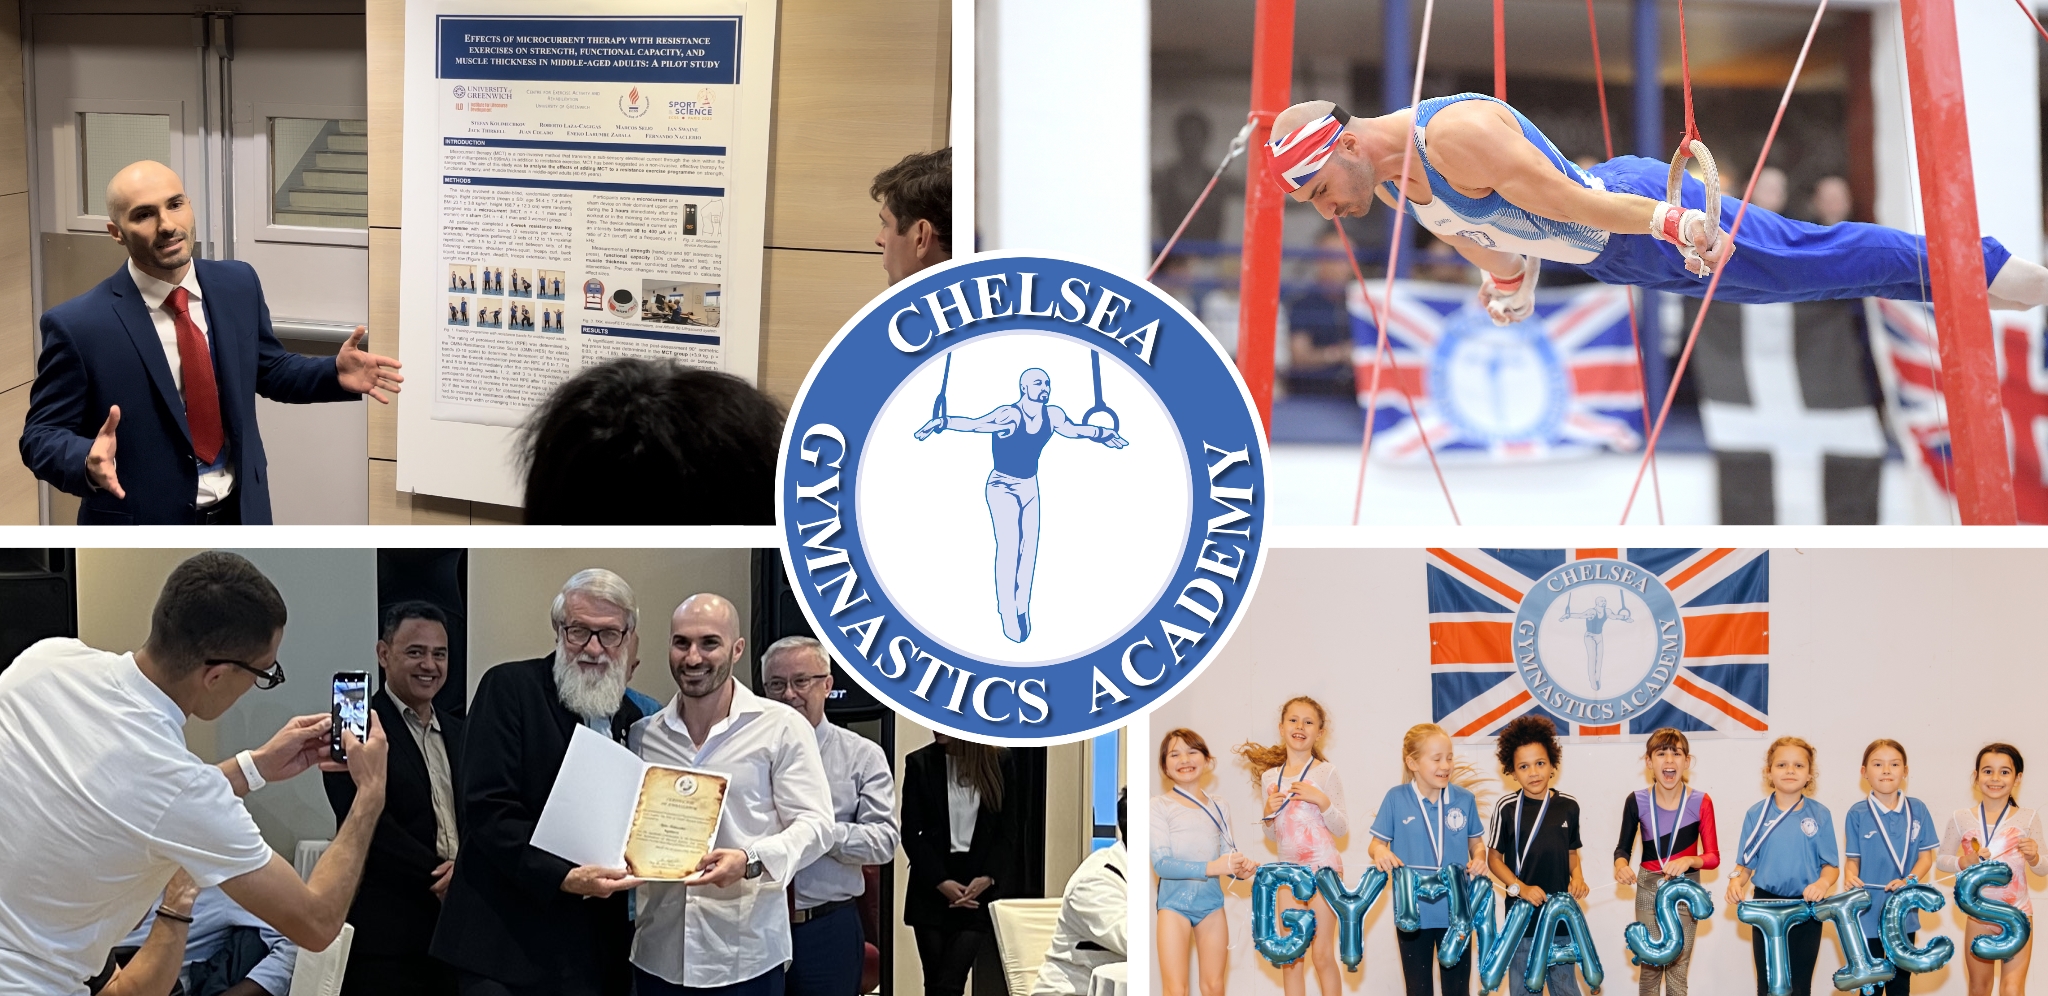 Sponsor Chelsea Gymnastics Academy in London